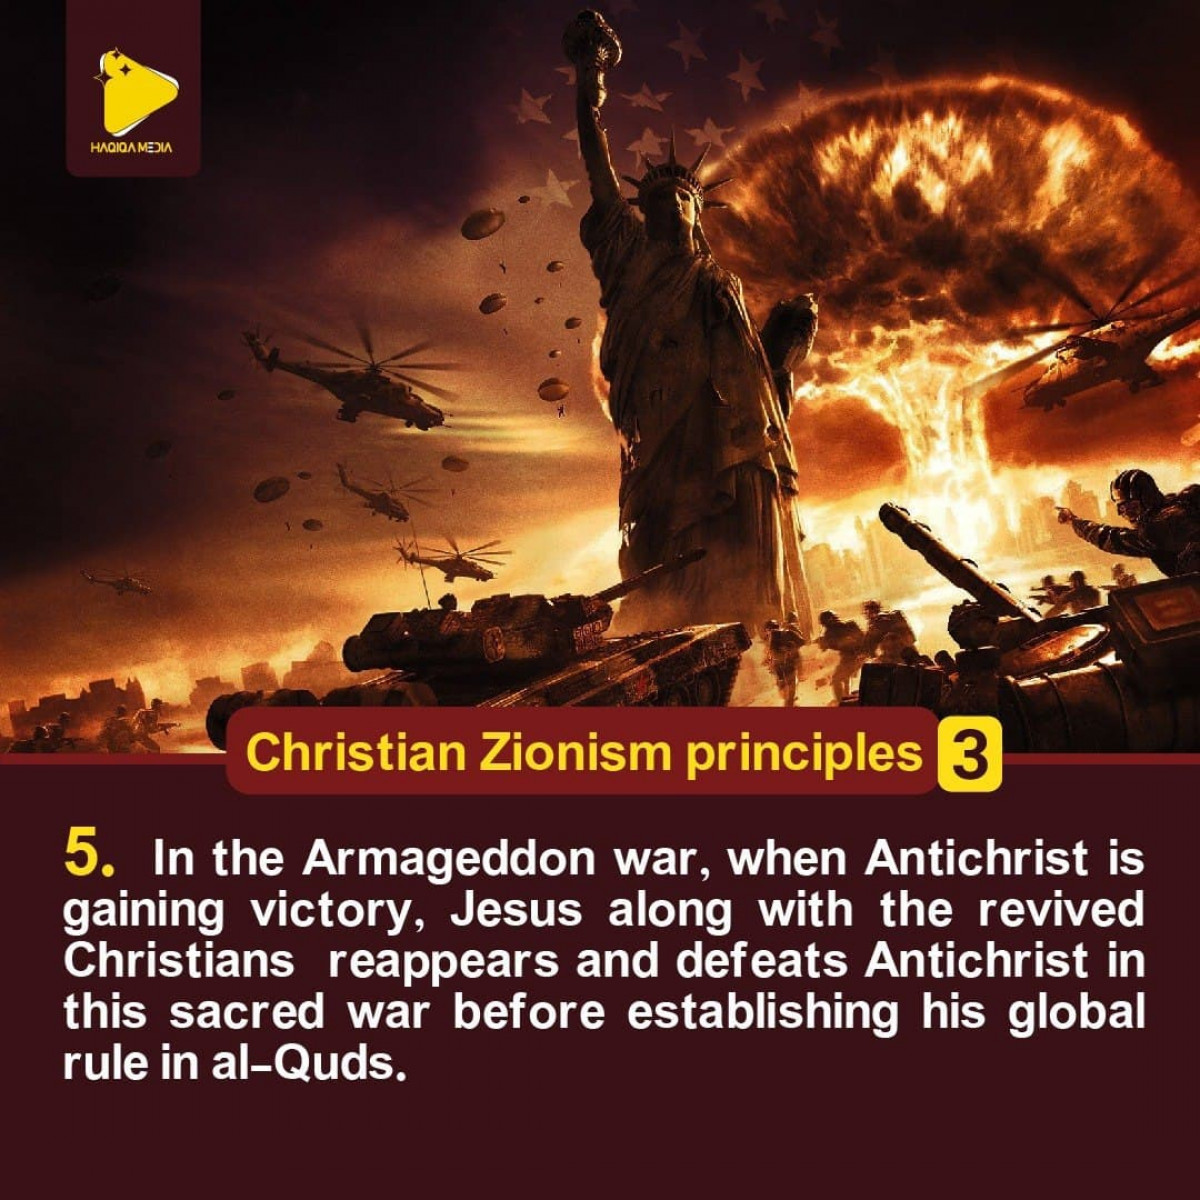 Christian Zionism principles 3